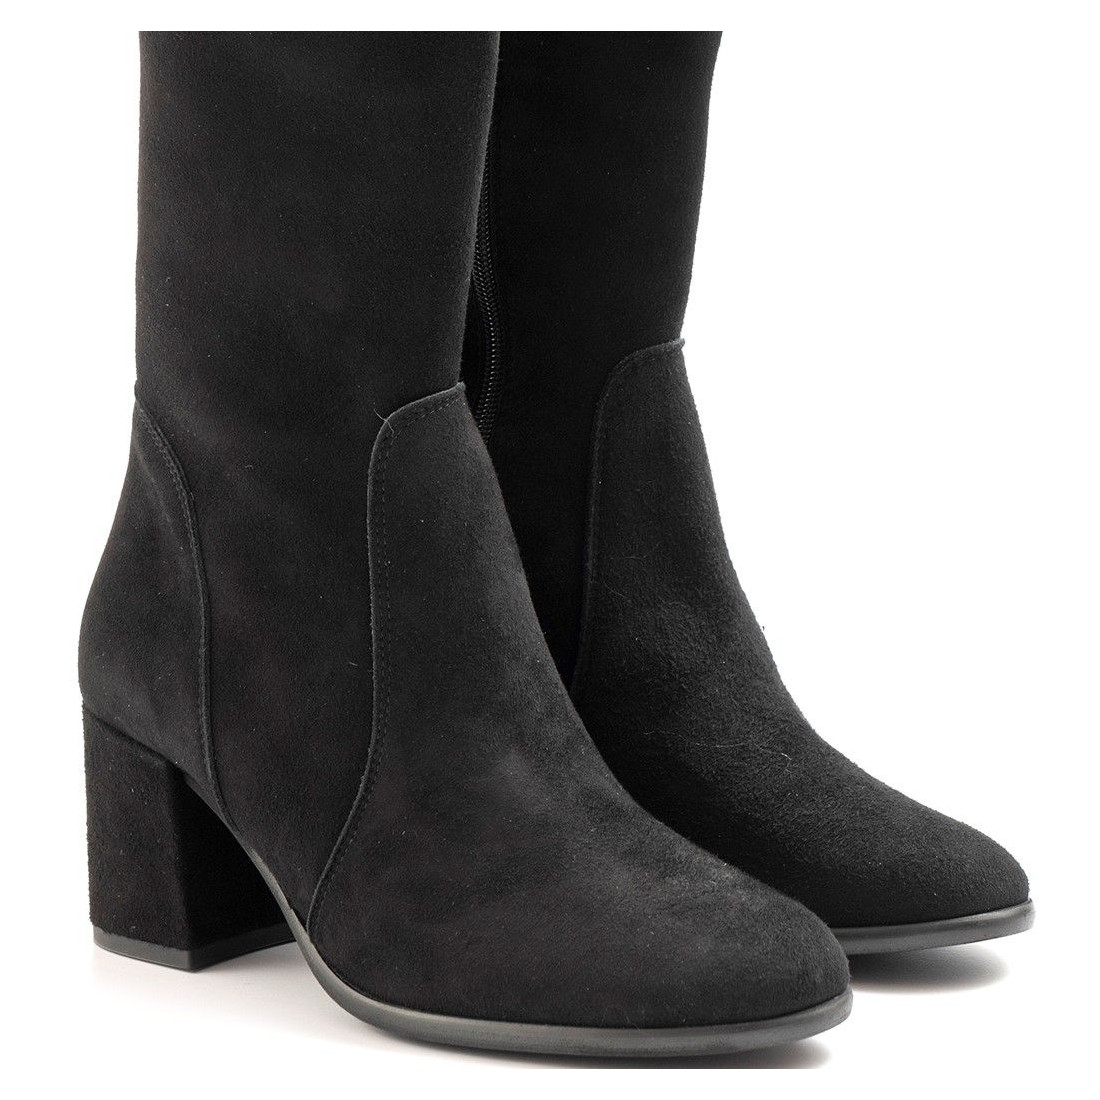 Black suede Sangiorgio boots with medium heel